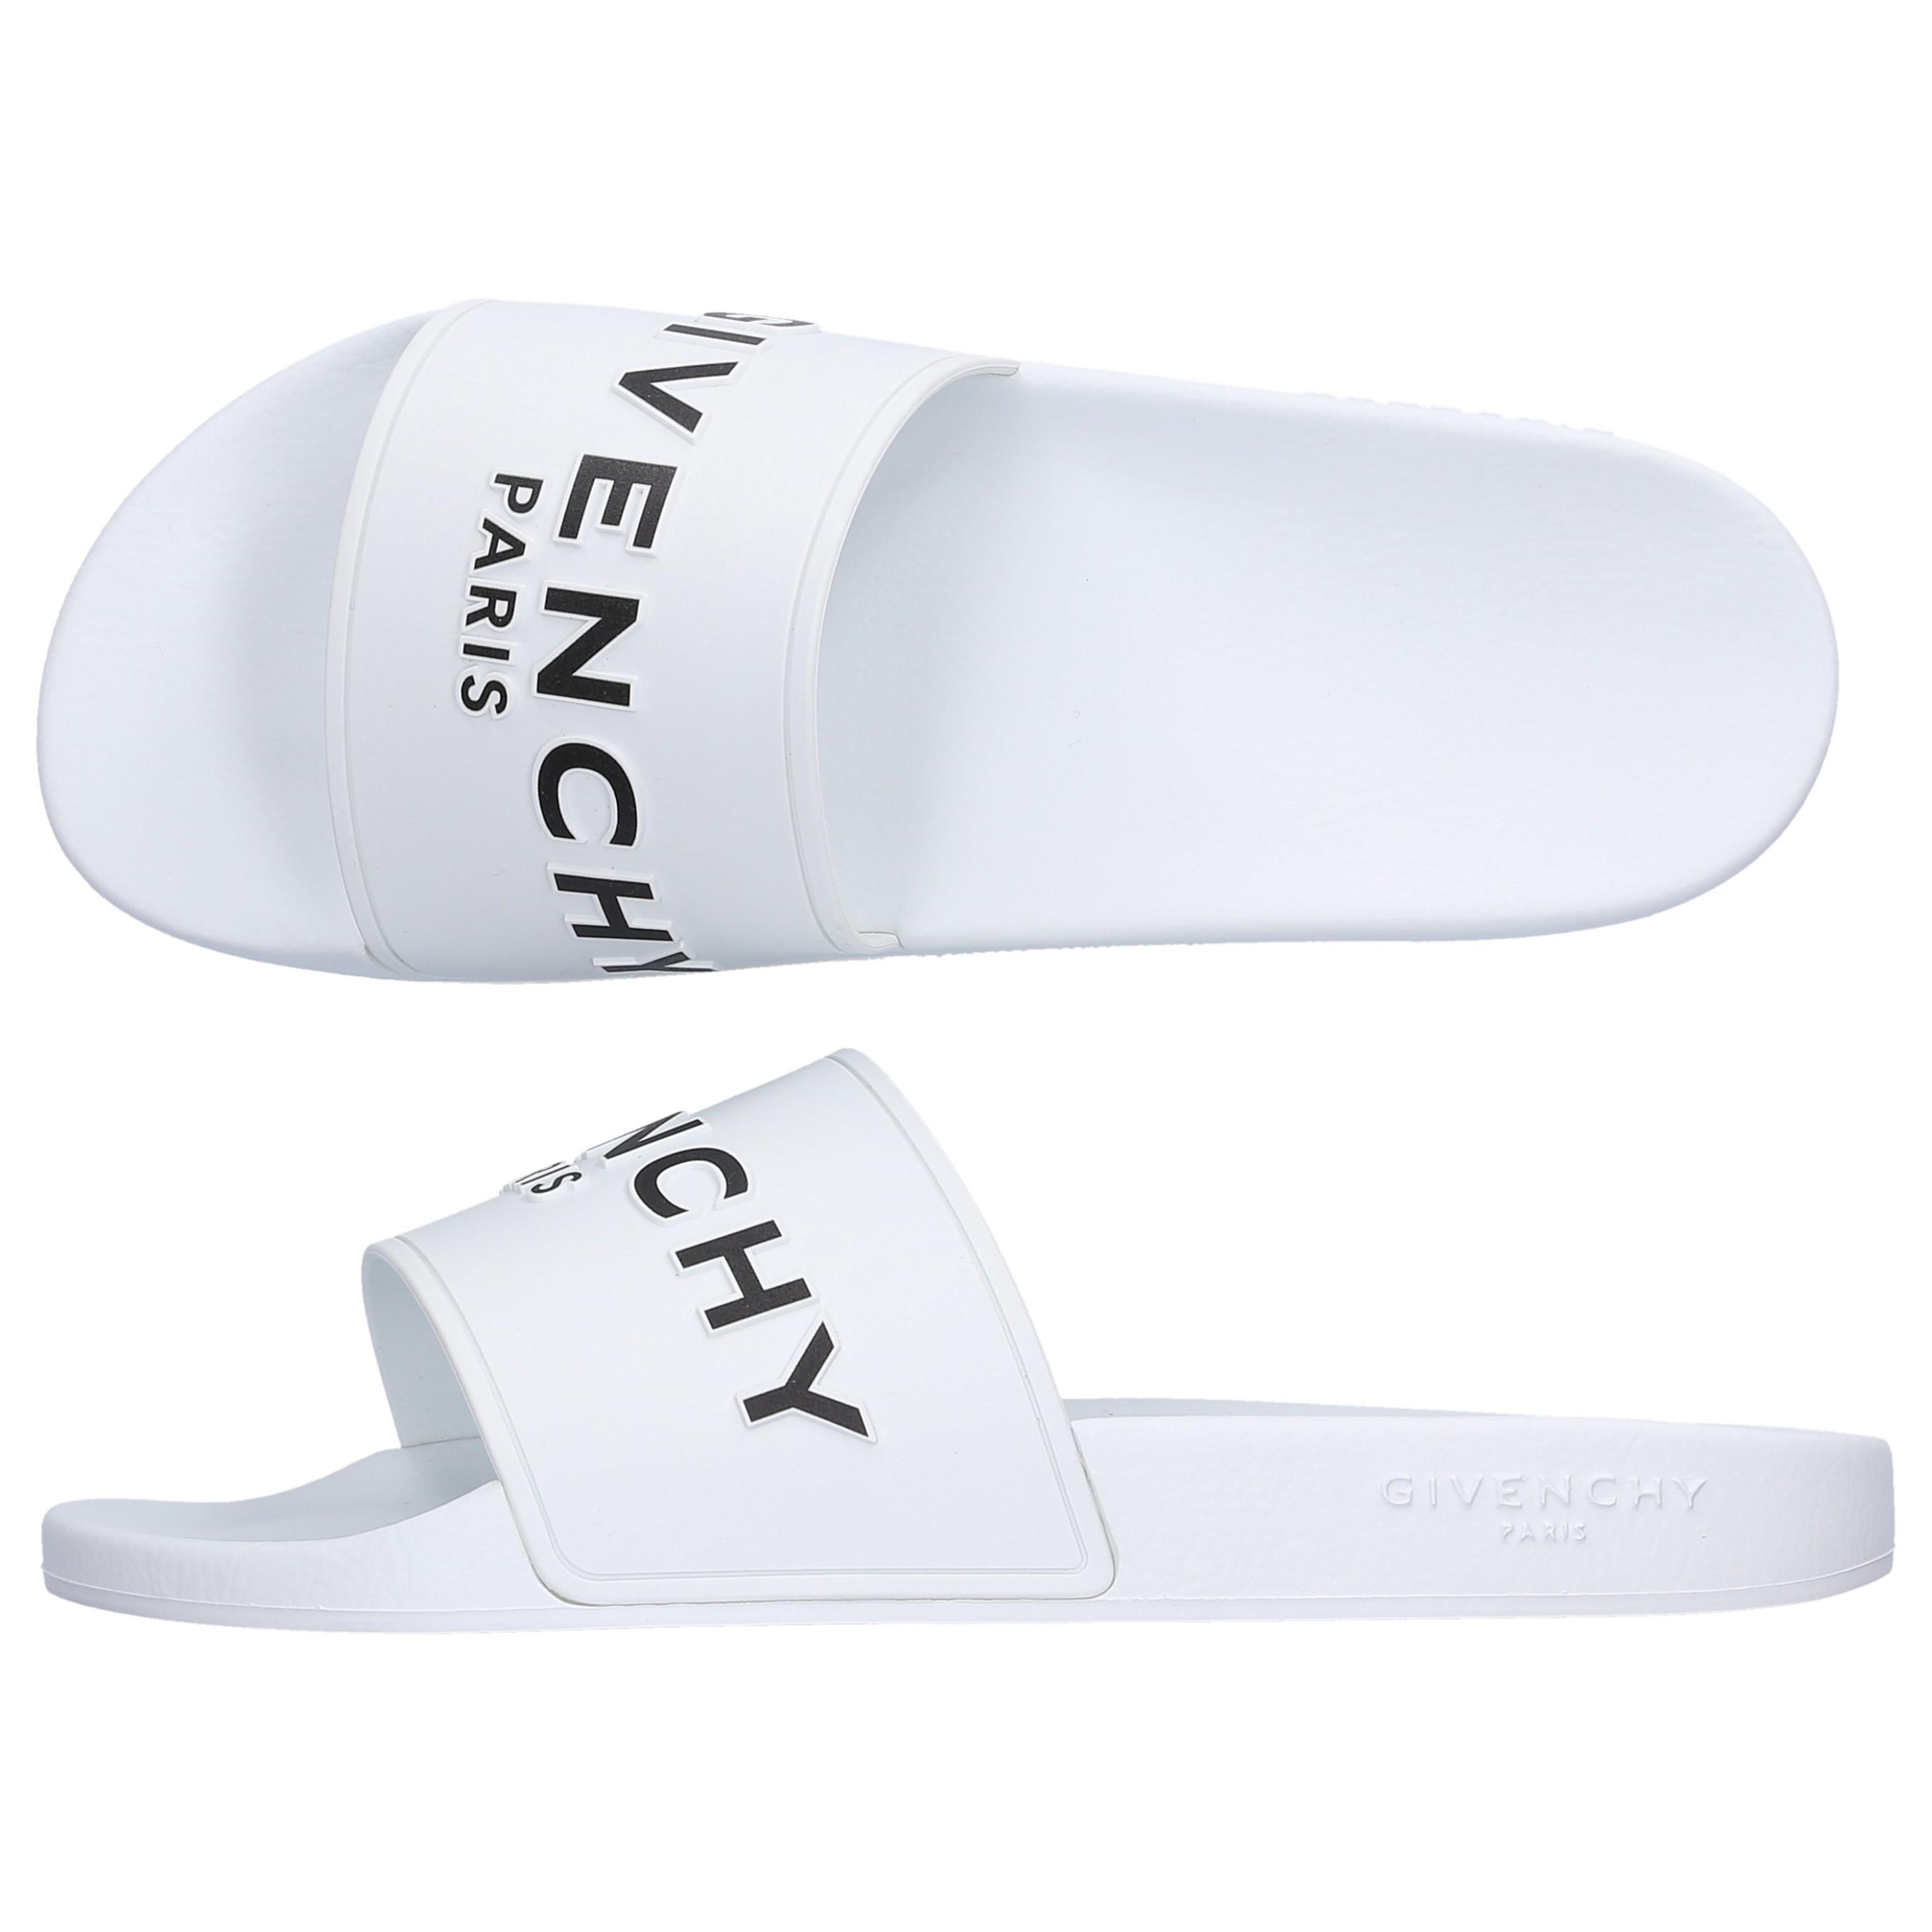 Givenchy Polyurethane Slide Sandals in White for Men - Save 64% - Lyst